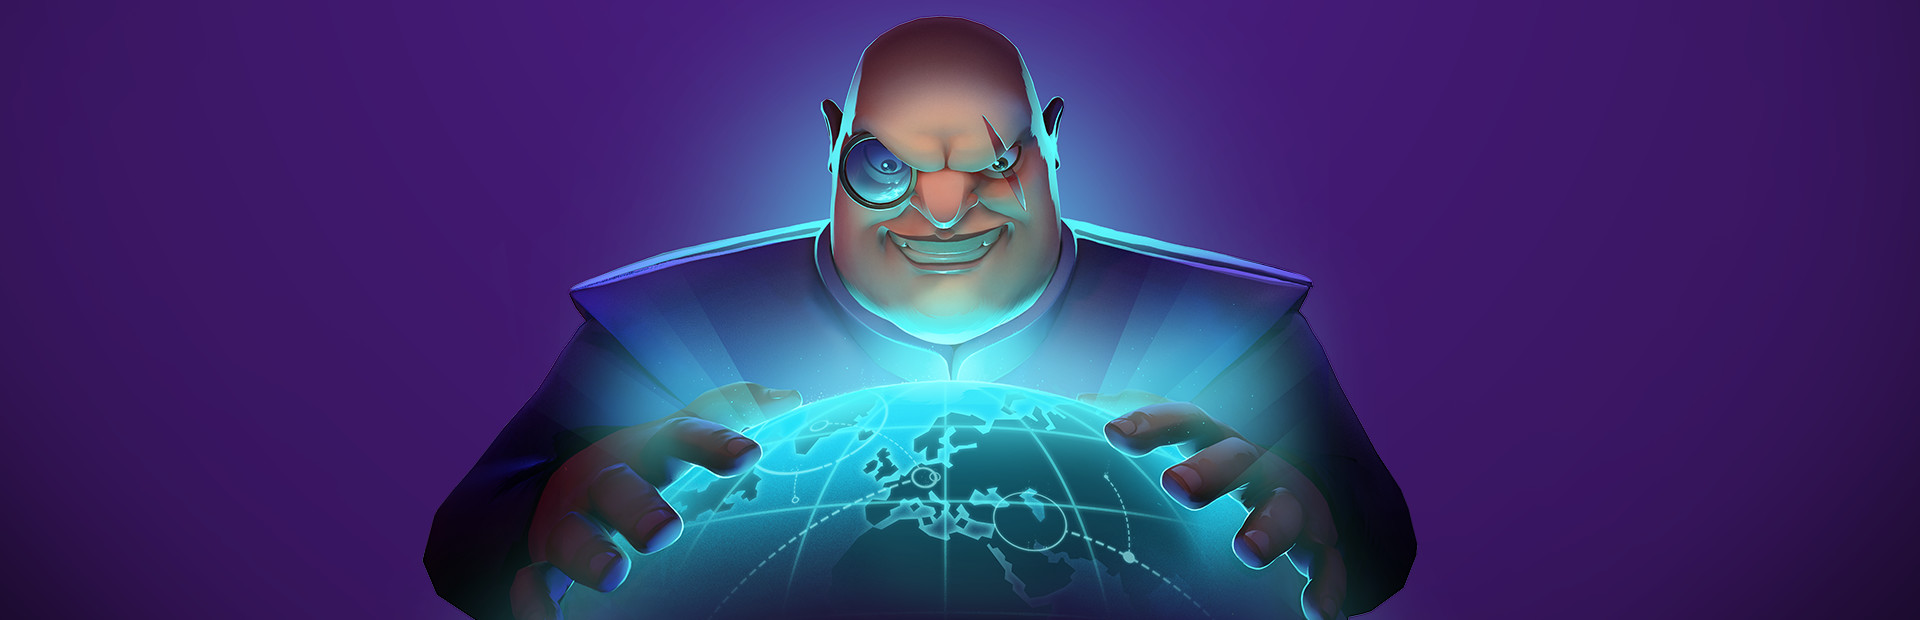 Evil Genius 2: World Domination cover image